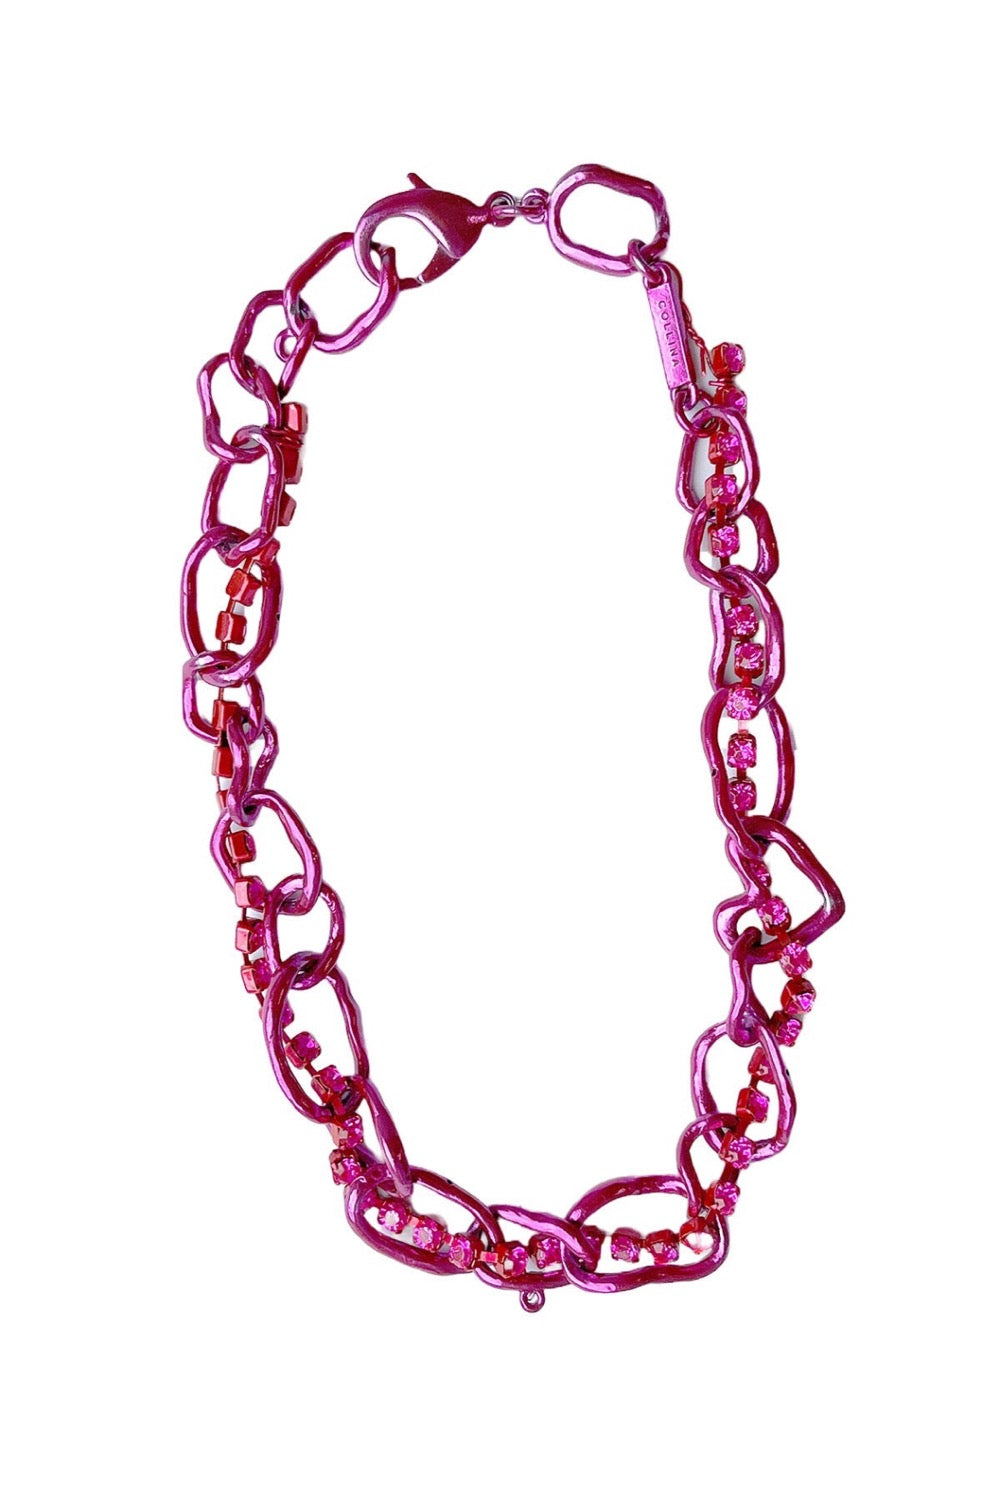 Collina Strada - Rhinestone Crushed Chain Necklace: Metallic Pinks